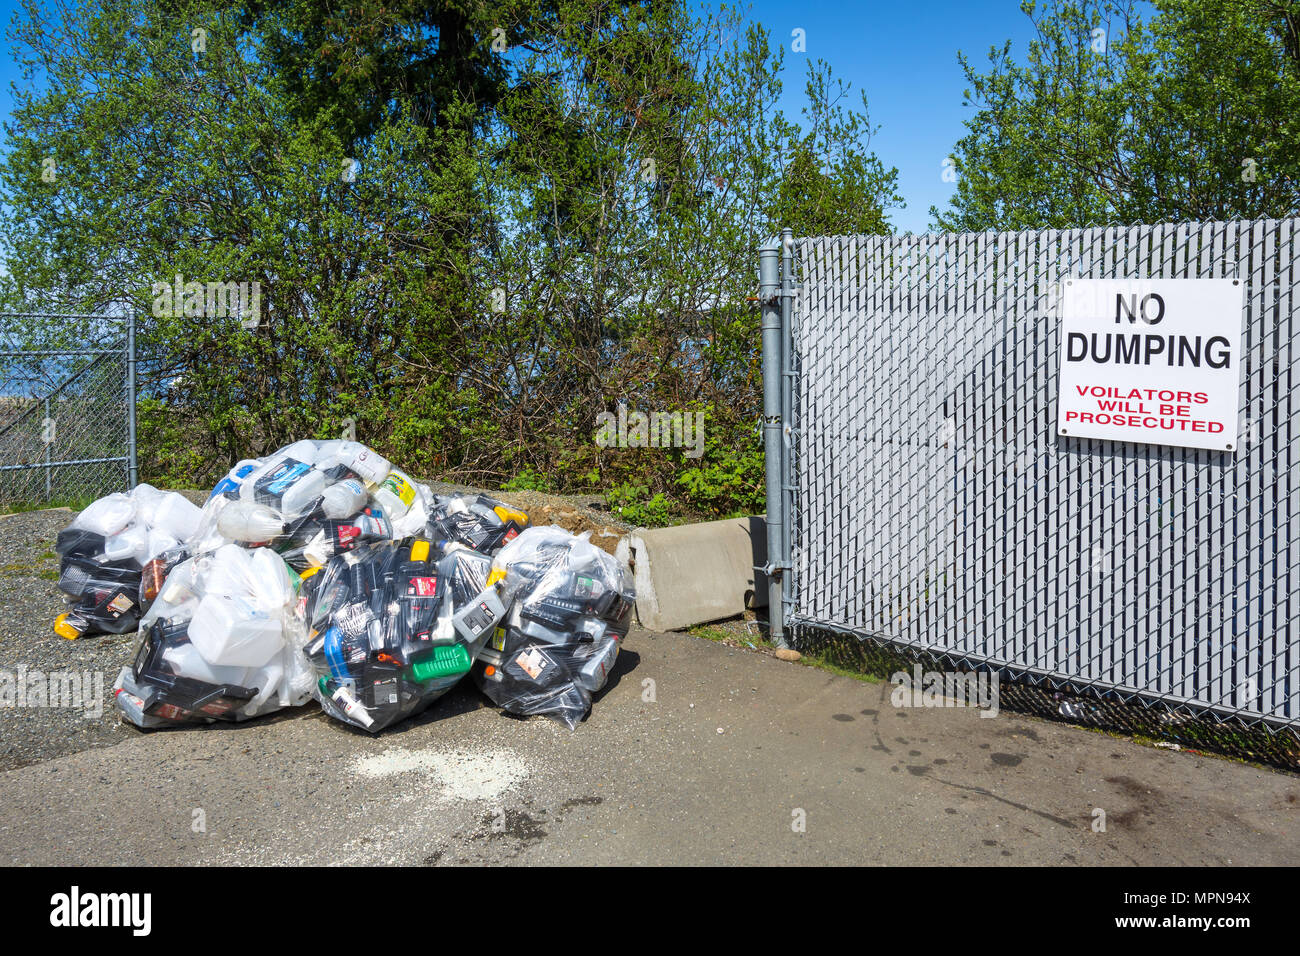 Rubbish dumped next to no dumping sign - Buckley Bay, British Columbia, Canada. Stock Photo